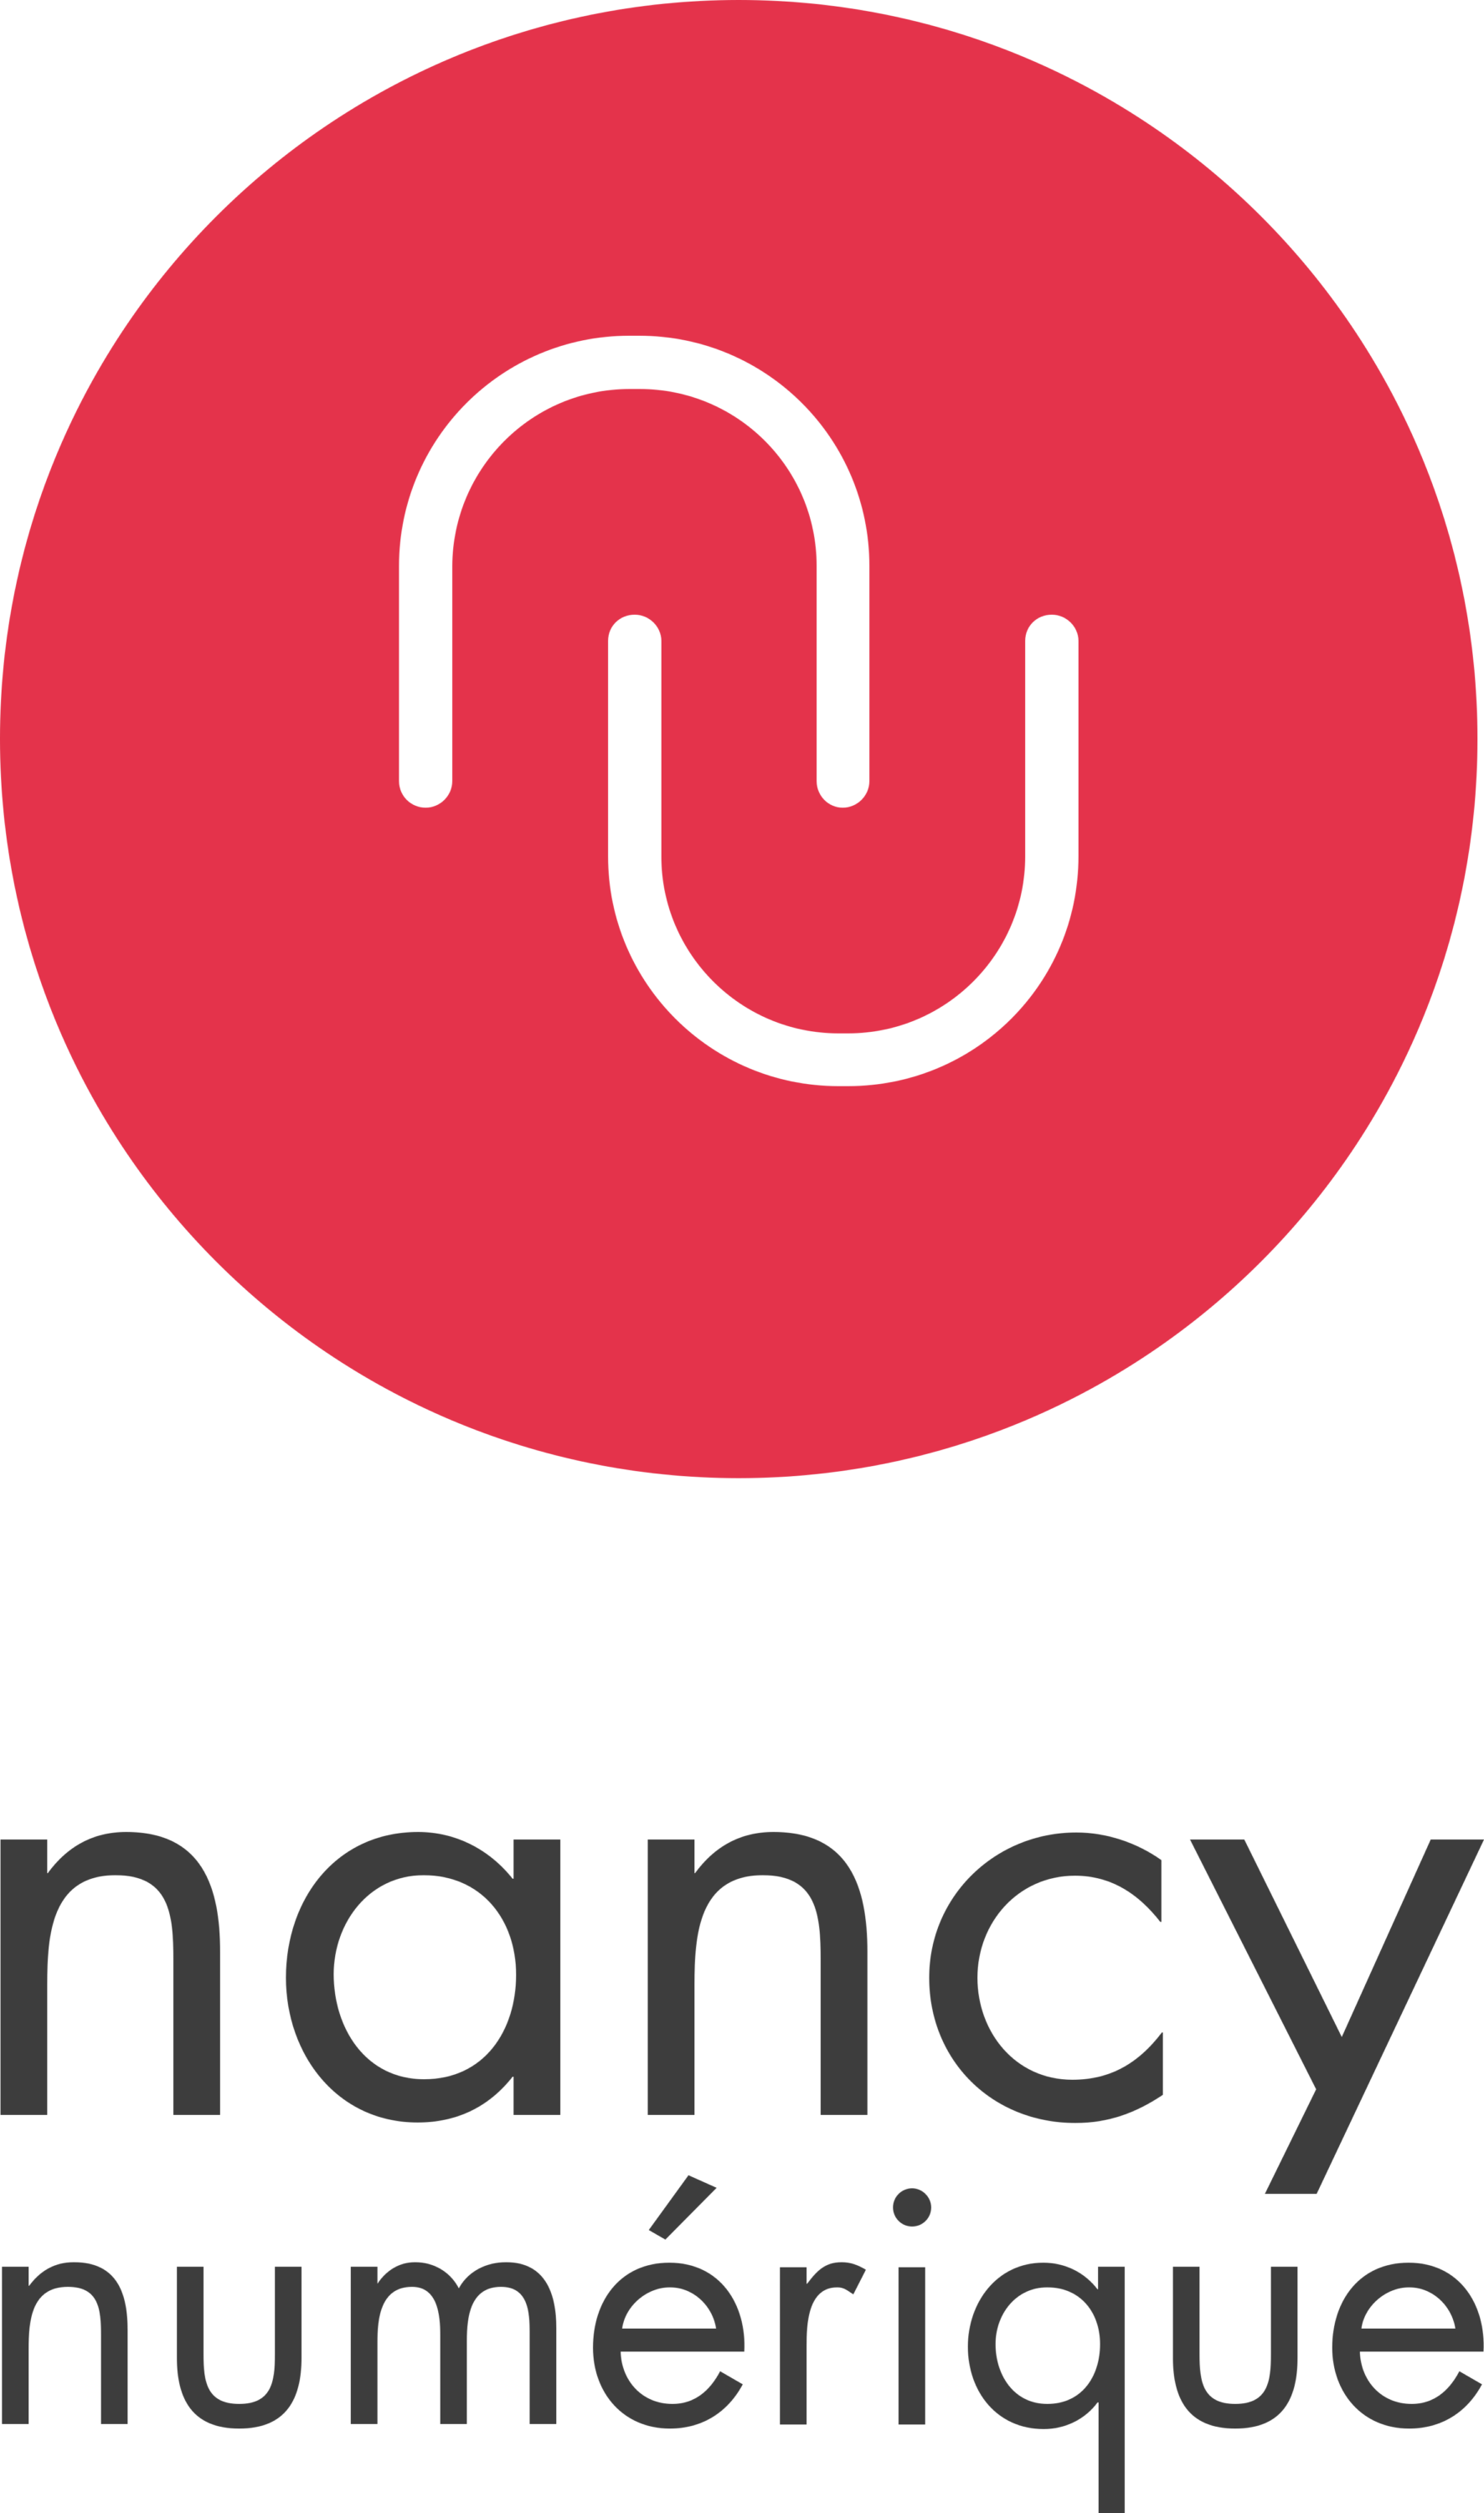 Nancy Numerique Logo